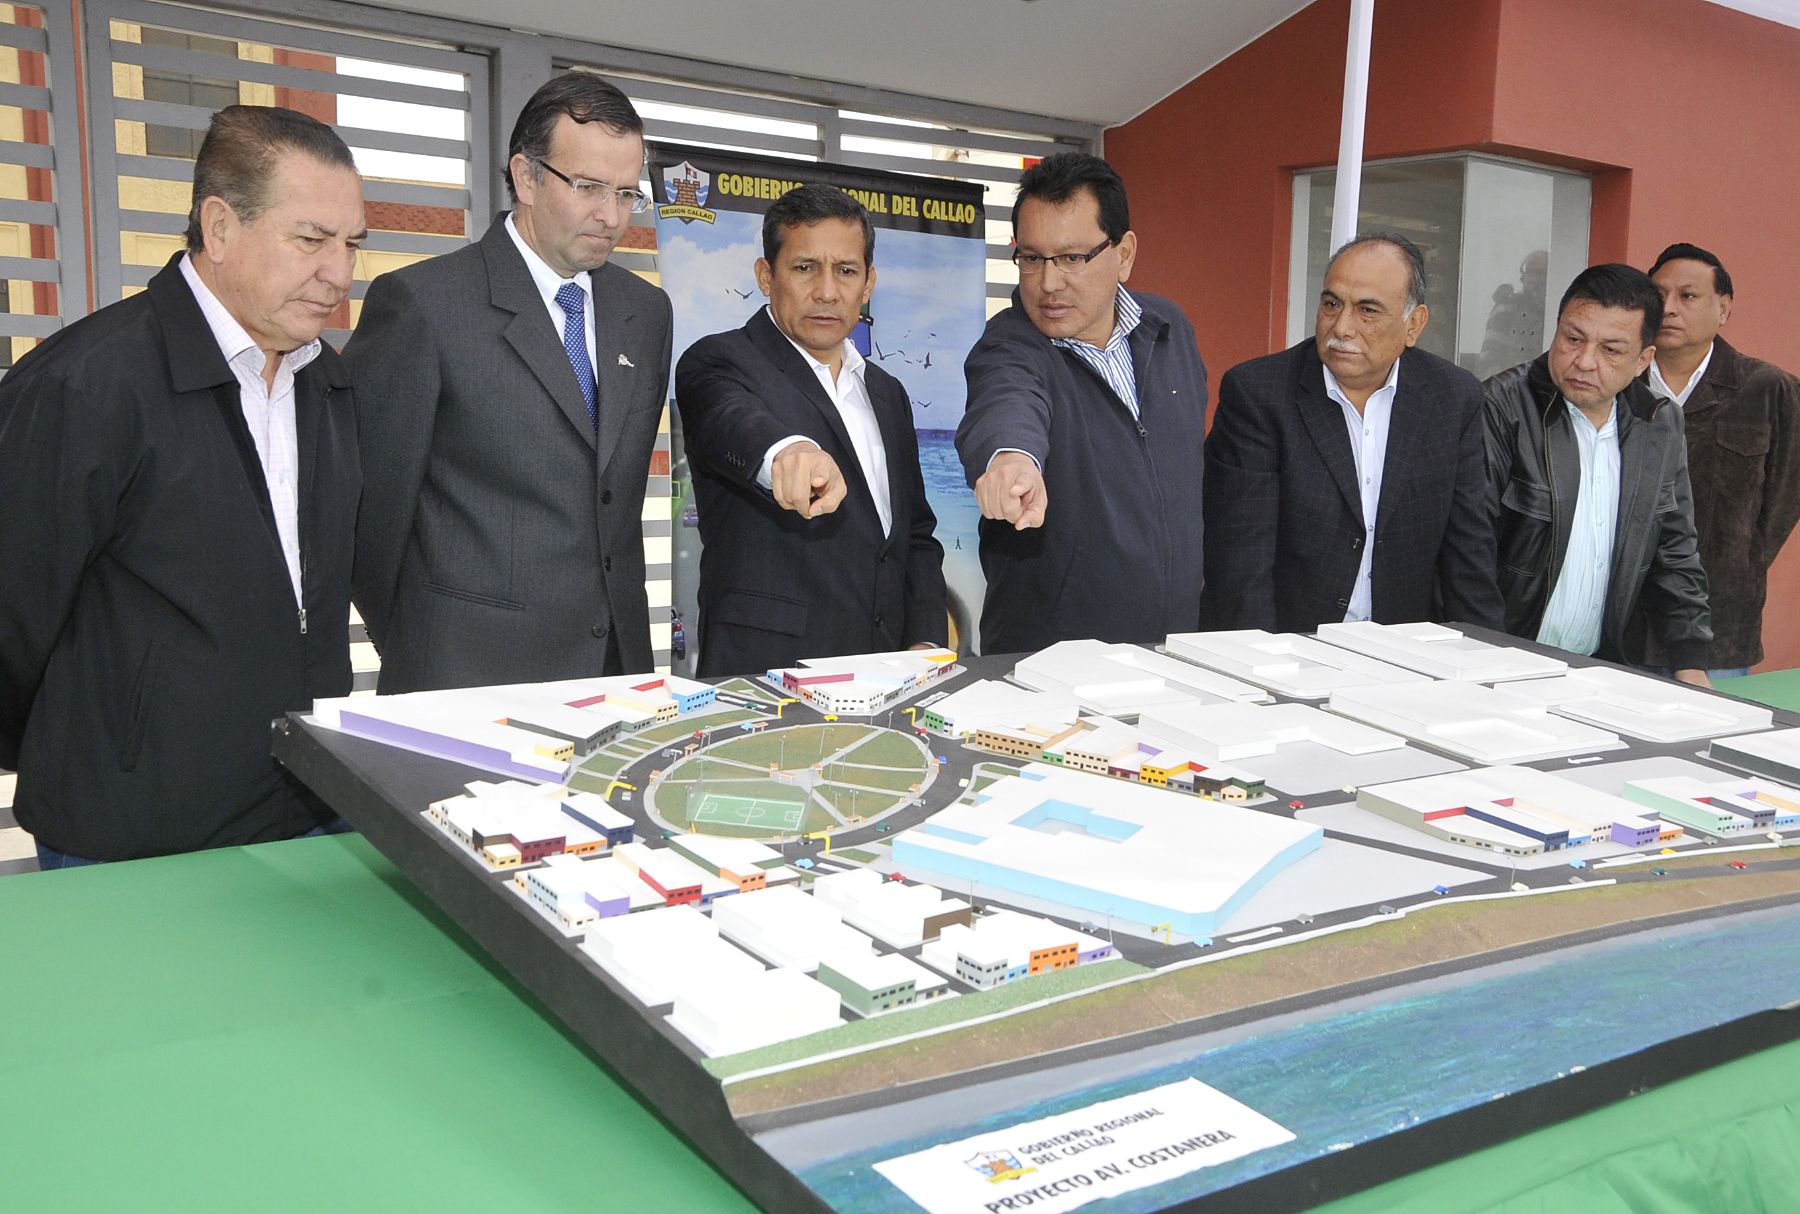 President Ollanta Humala participated in the extension works of Costanera Avenue. Photo: ANDINA/Prensa Presidencia